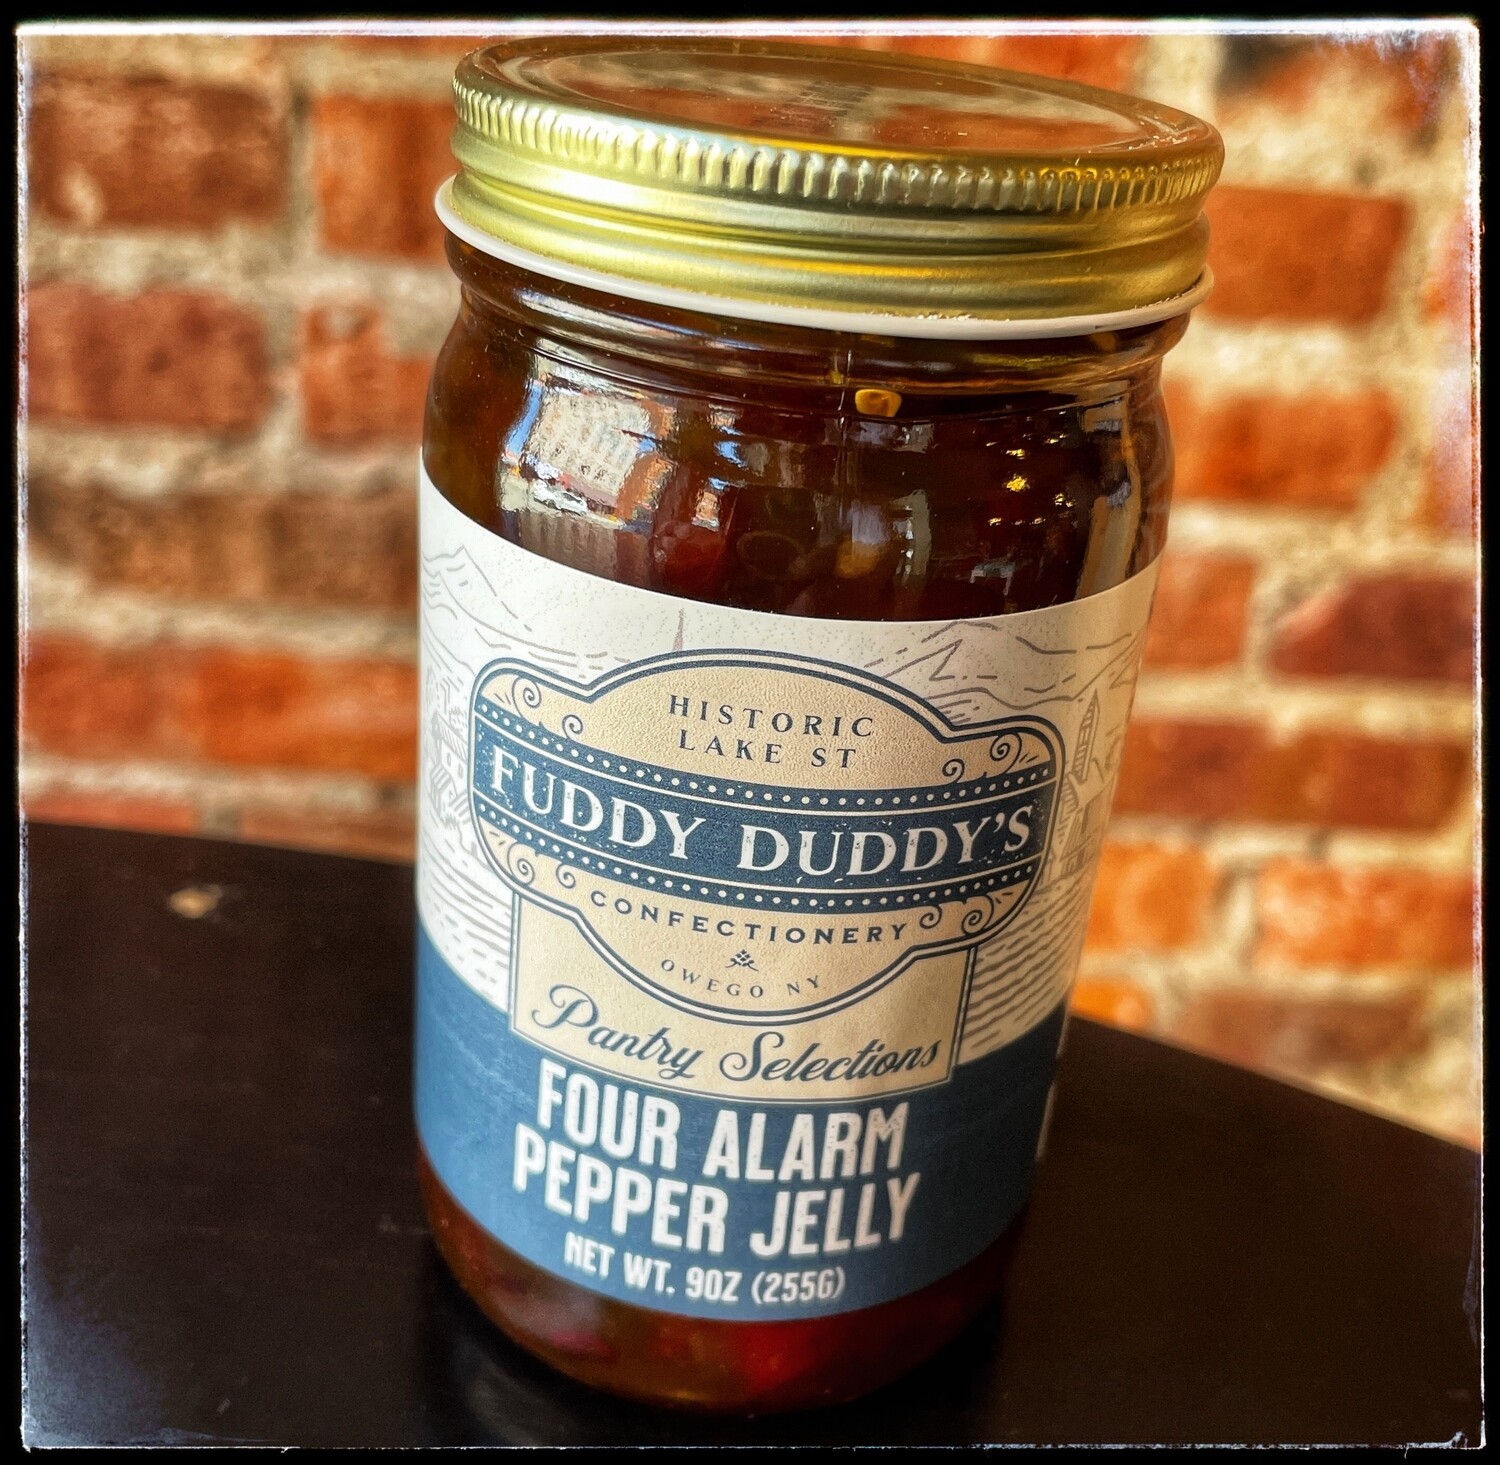 Fuddy Duddy's Four Alarm Pepper Jelly